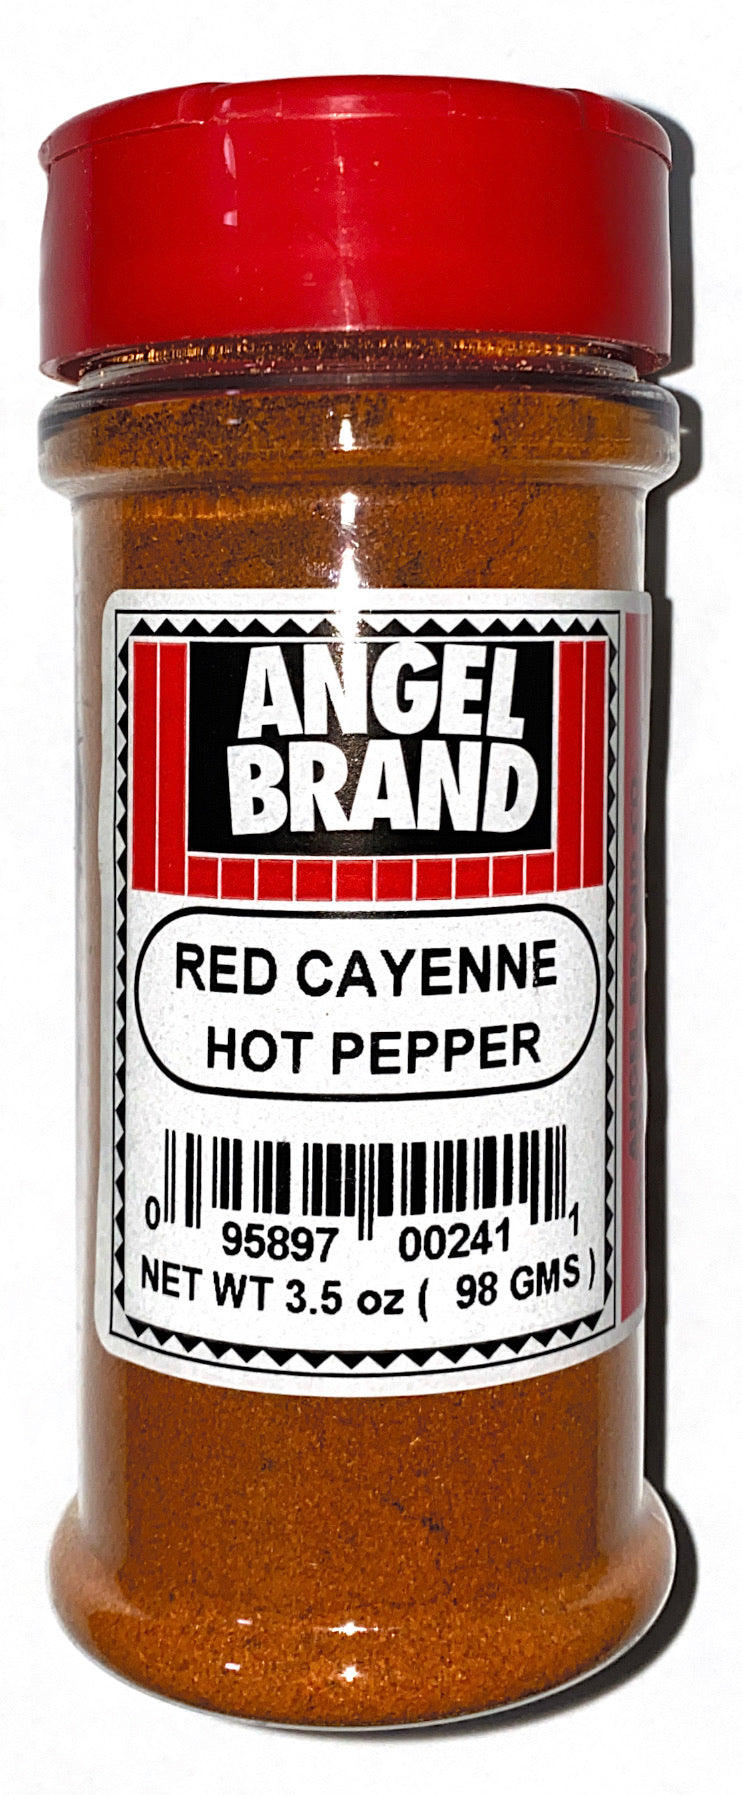 Red Cayenne Hot Pepper